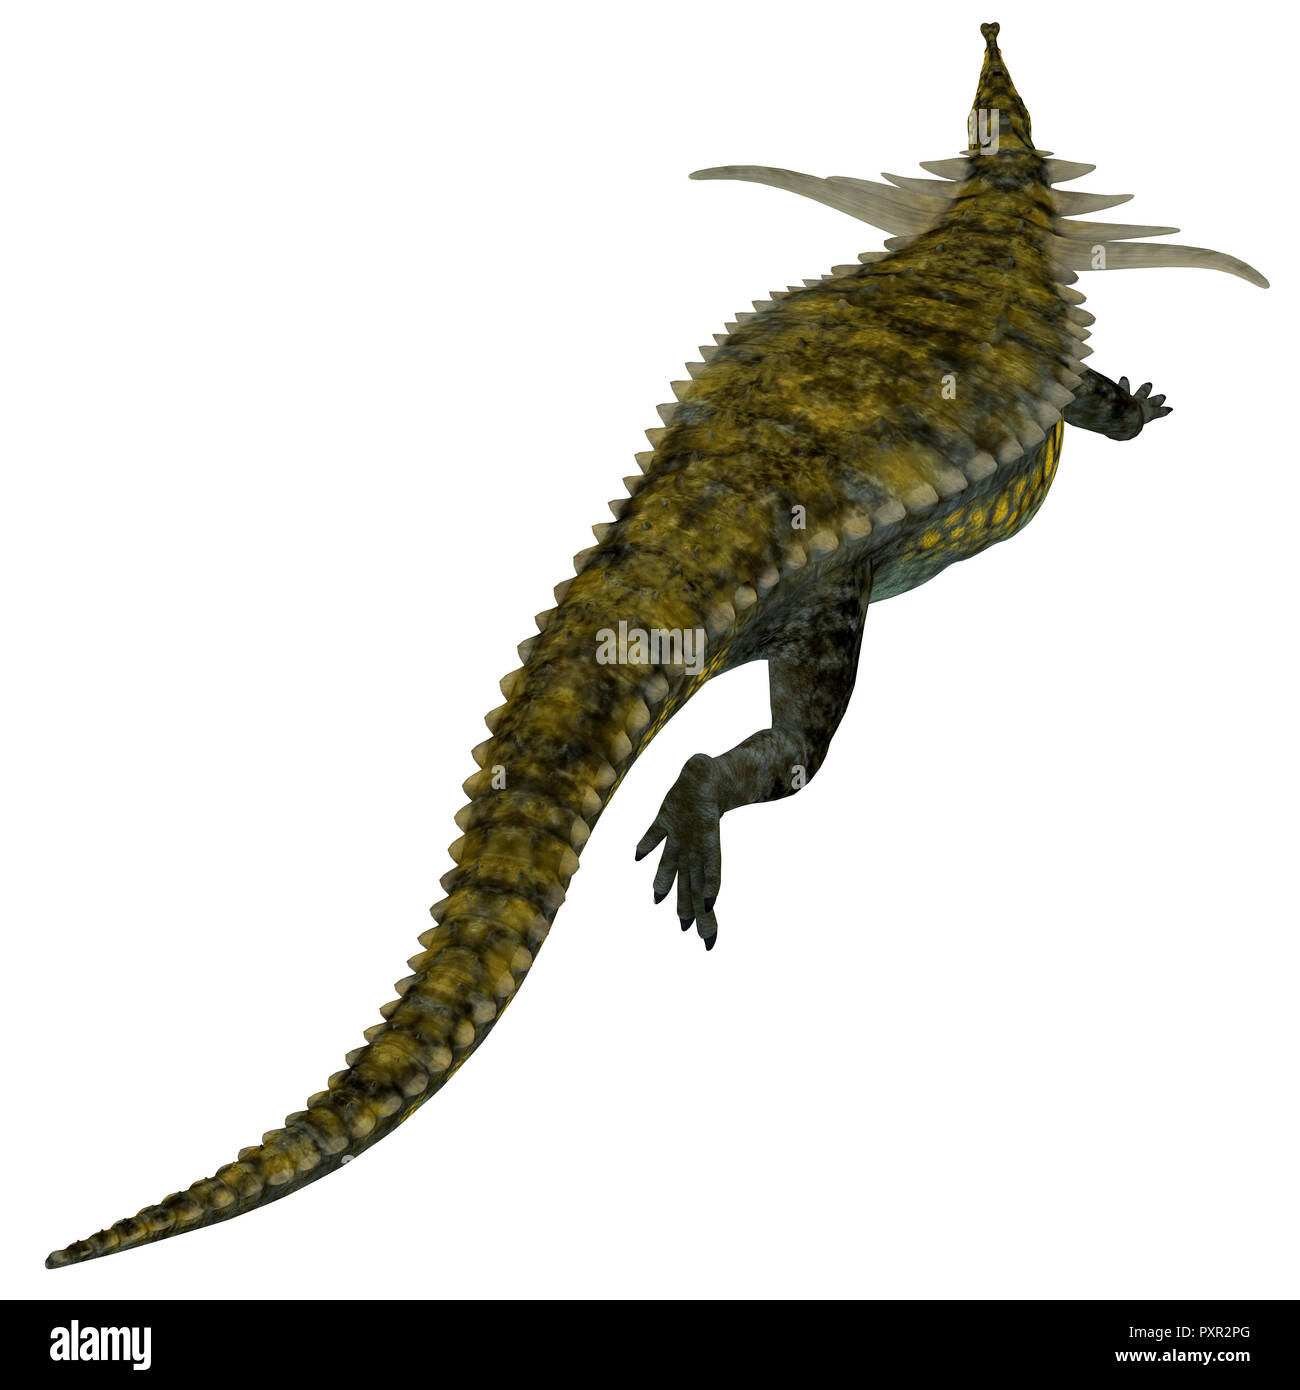 Desmatosuchus Dinosaur Tail - Desmatosuchus was an armored herbivorous dinosaur that lived in Texas and Arizona during the Triassic Period. Stock Photo